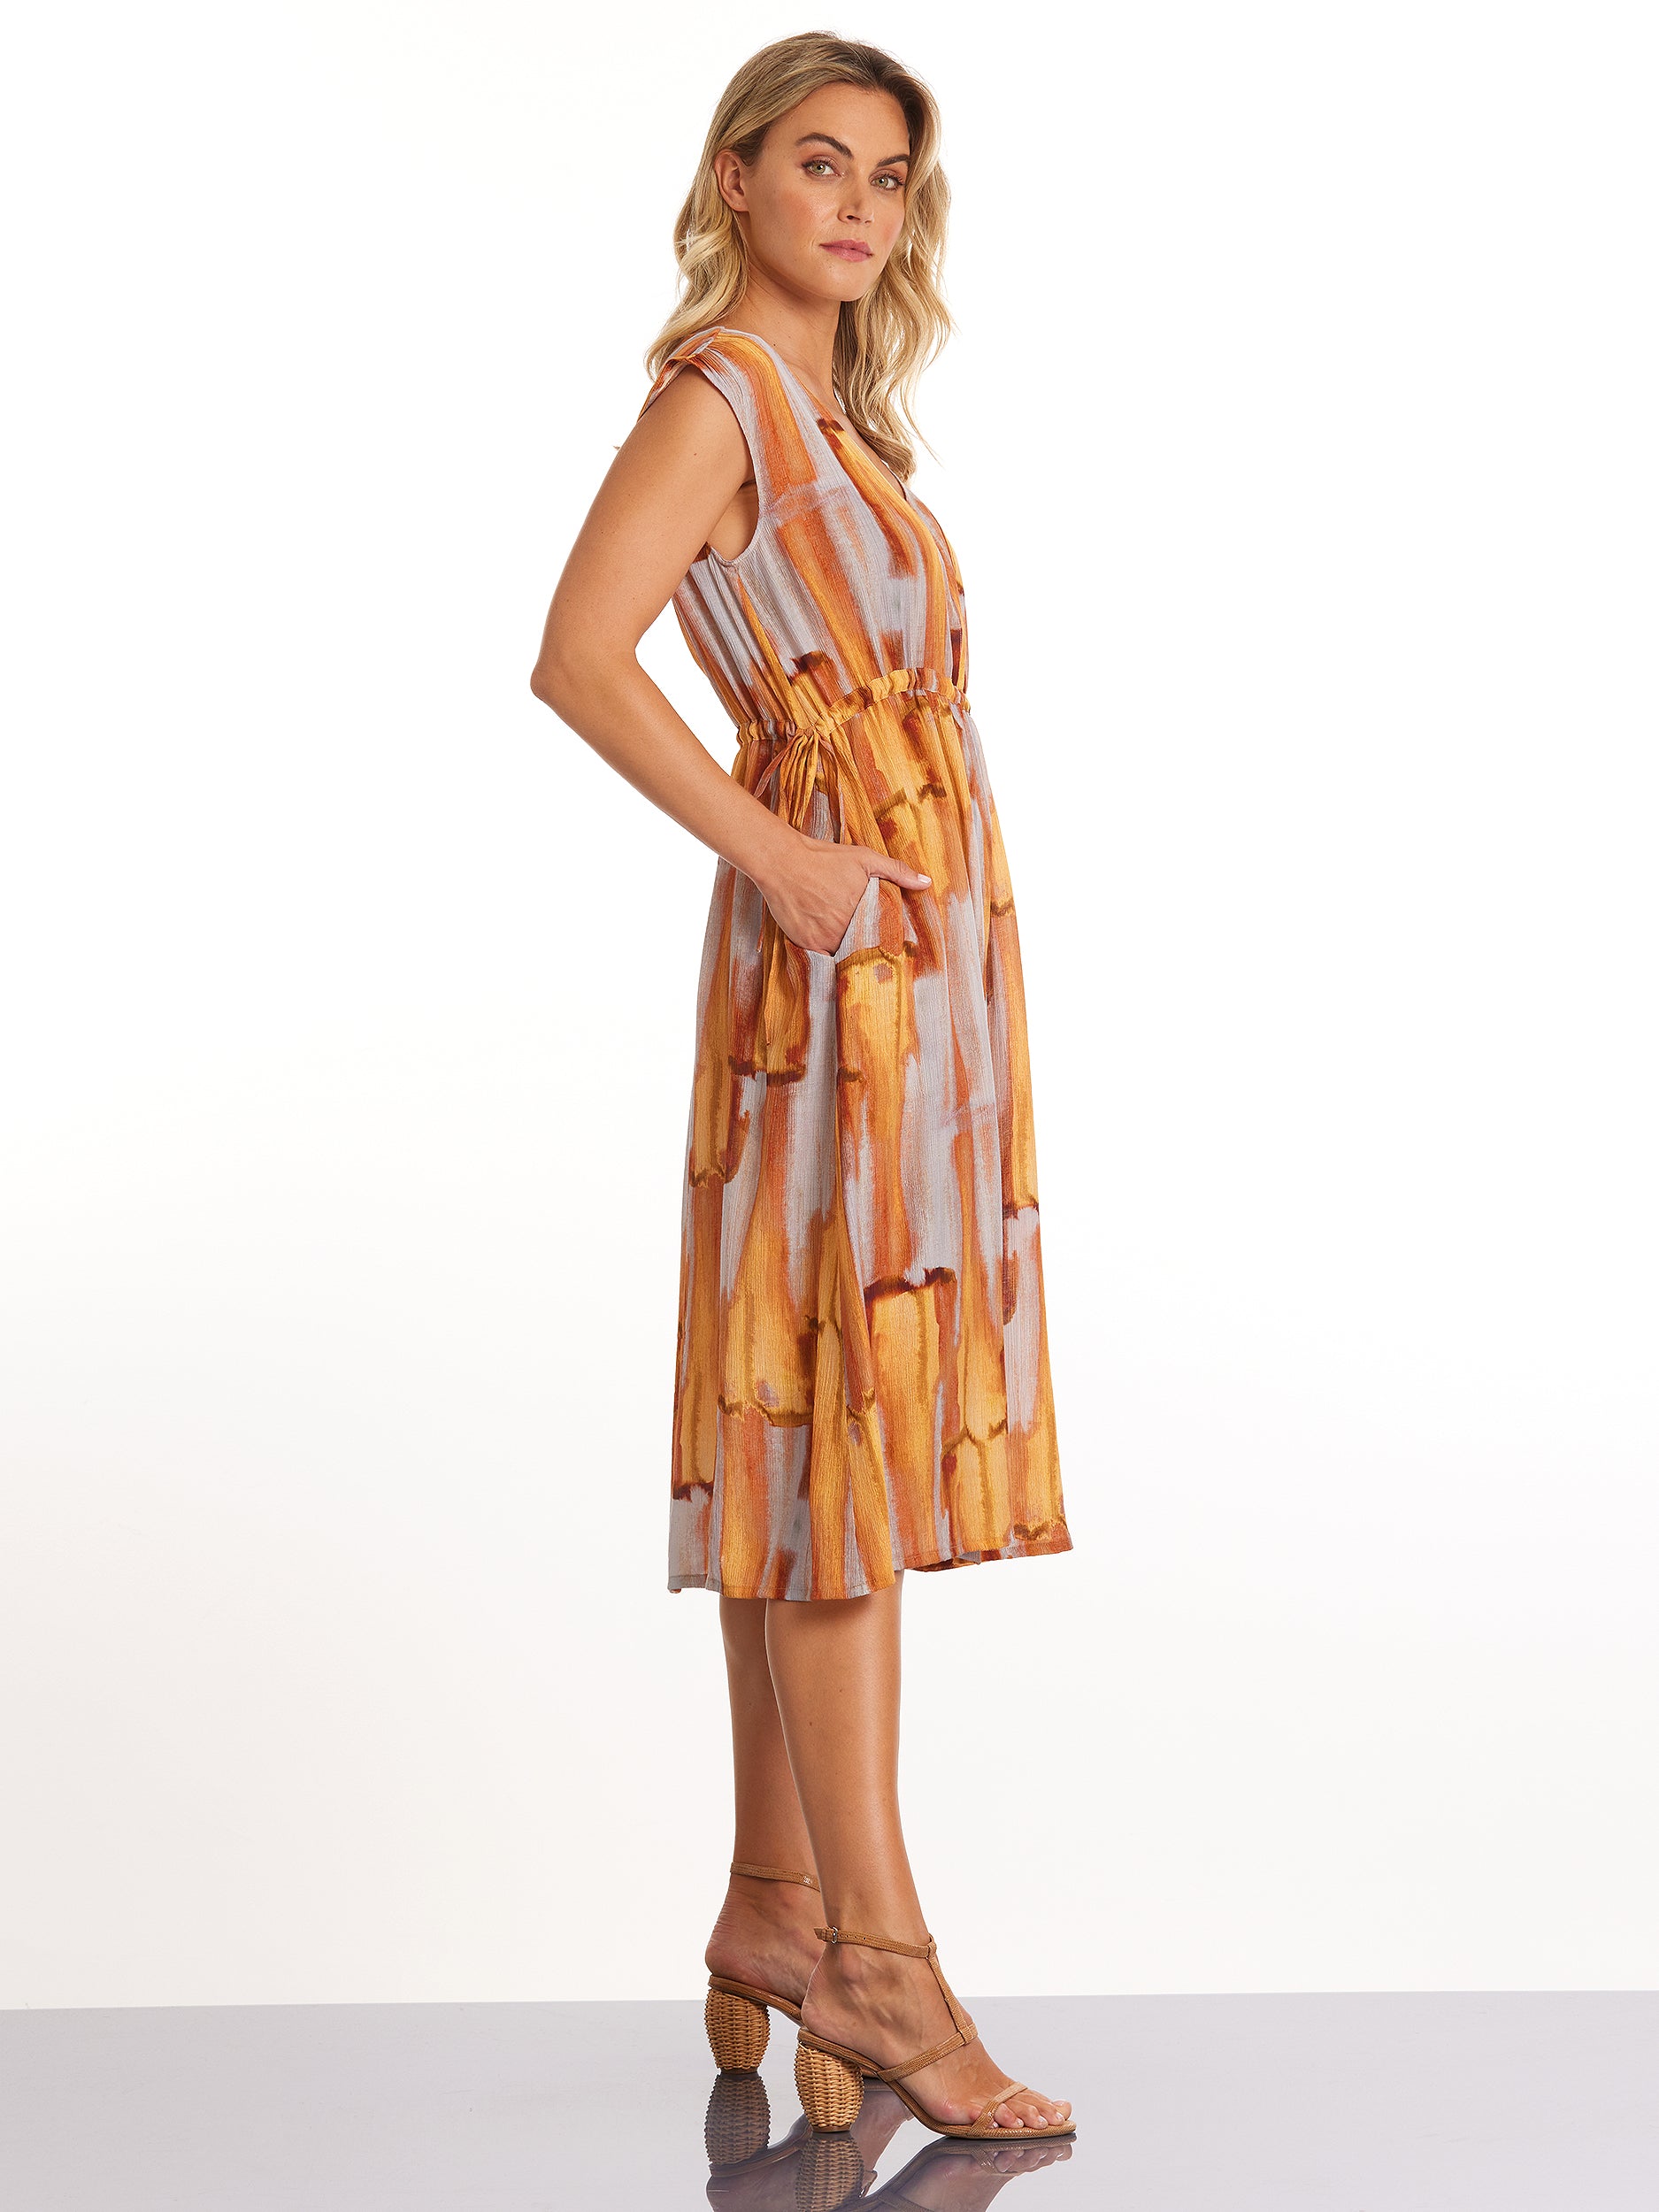 Short Sleeve Dawn Haze Dress - Marco Polo - Beechworth Emporium